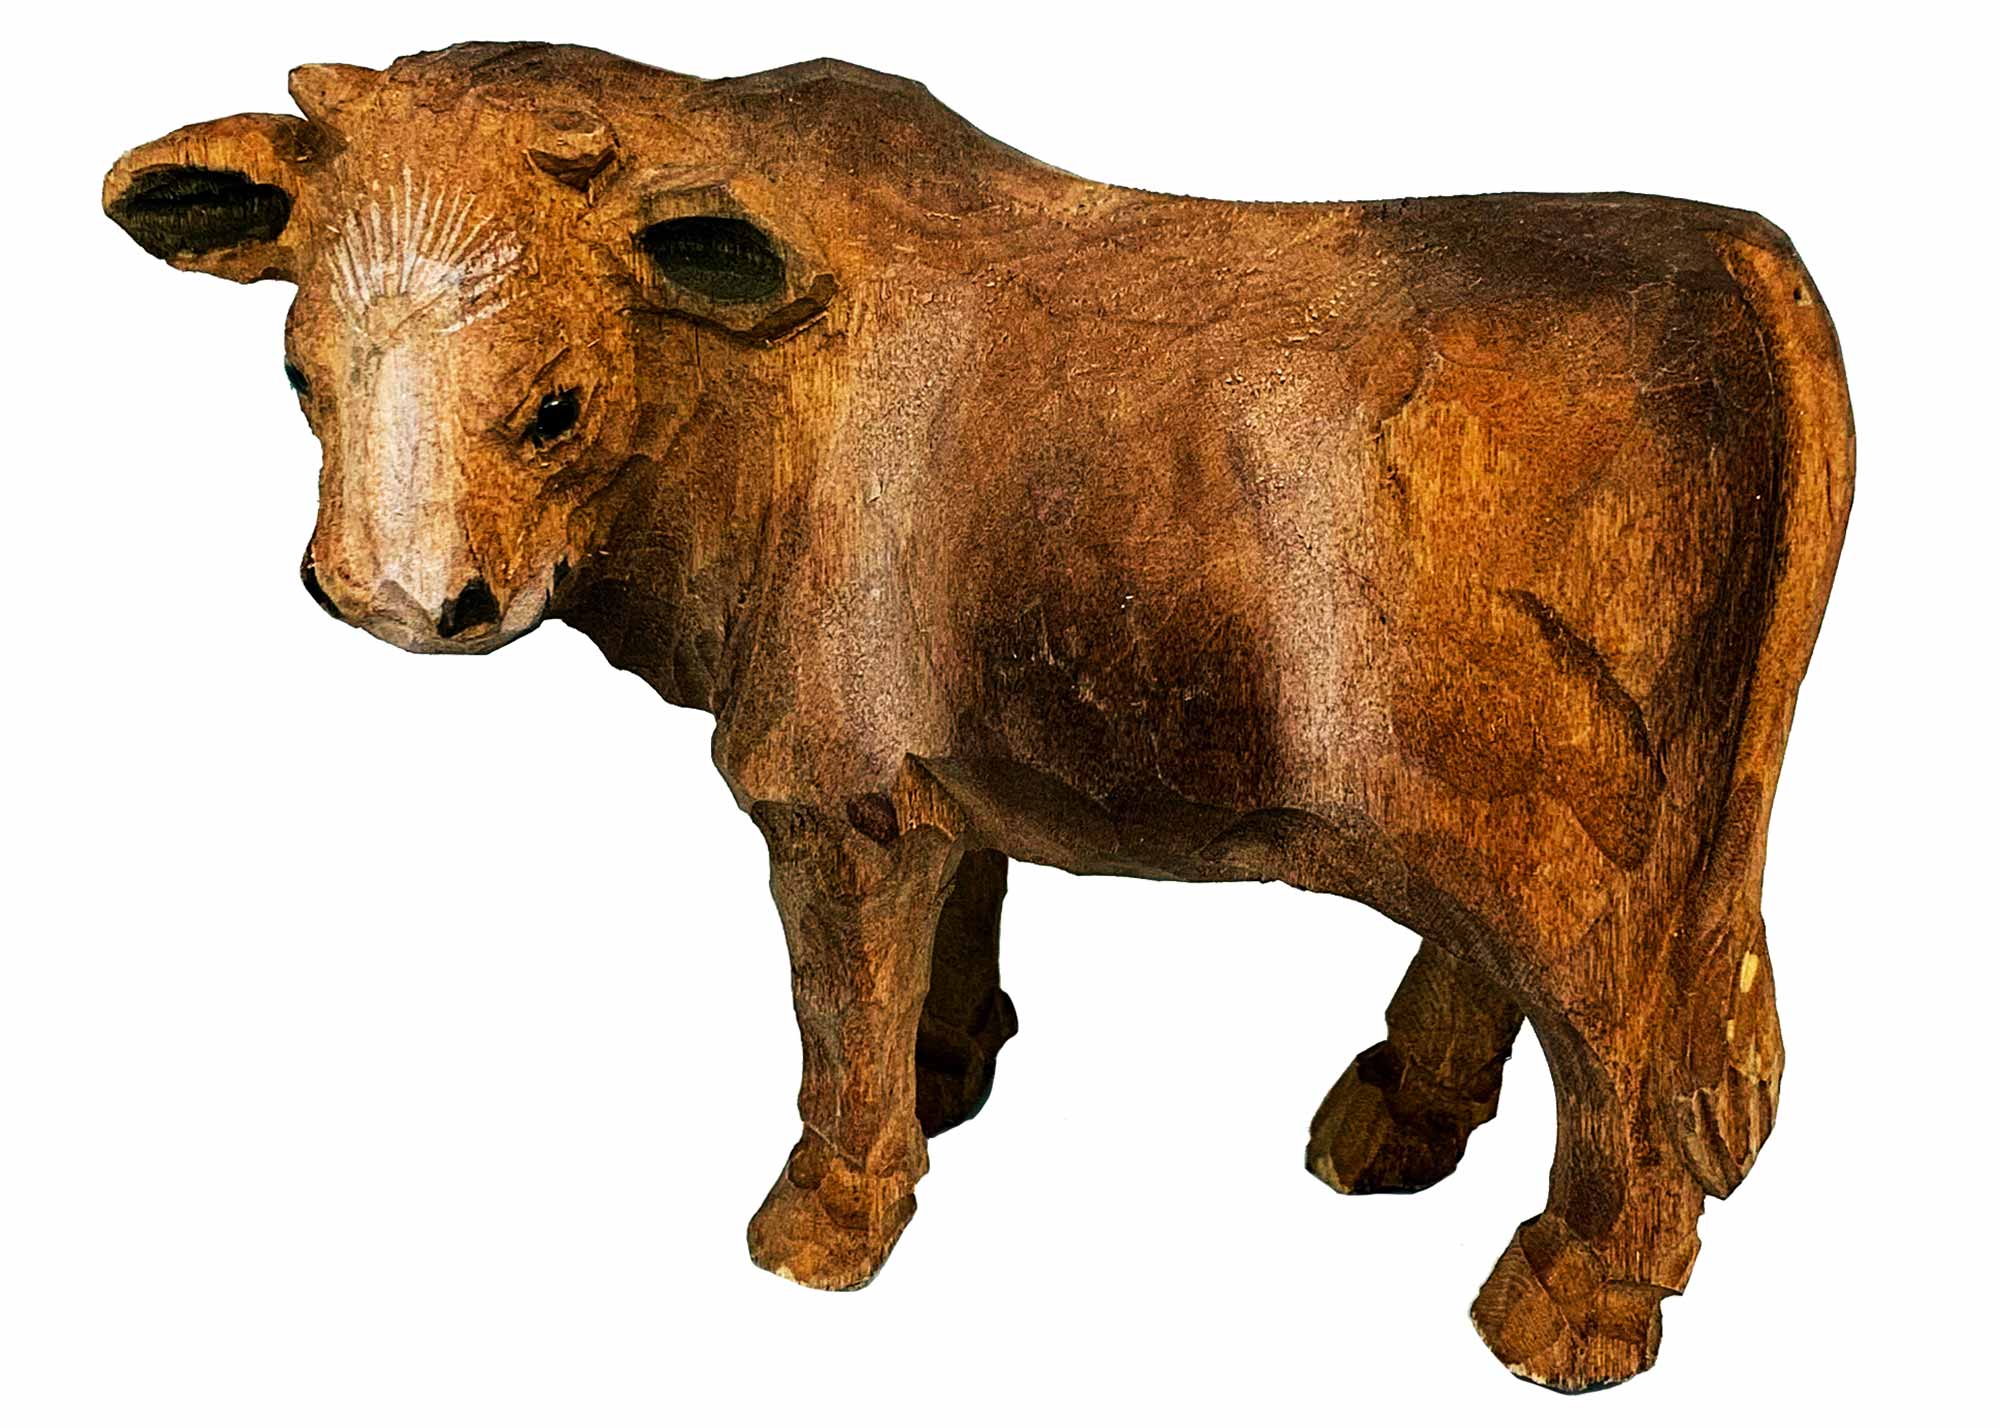 Buy Carved Cow Figurine at GoldenCockerel.com